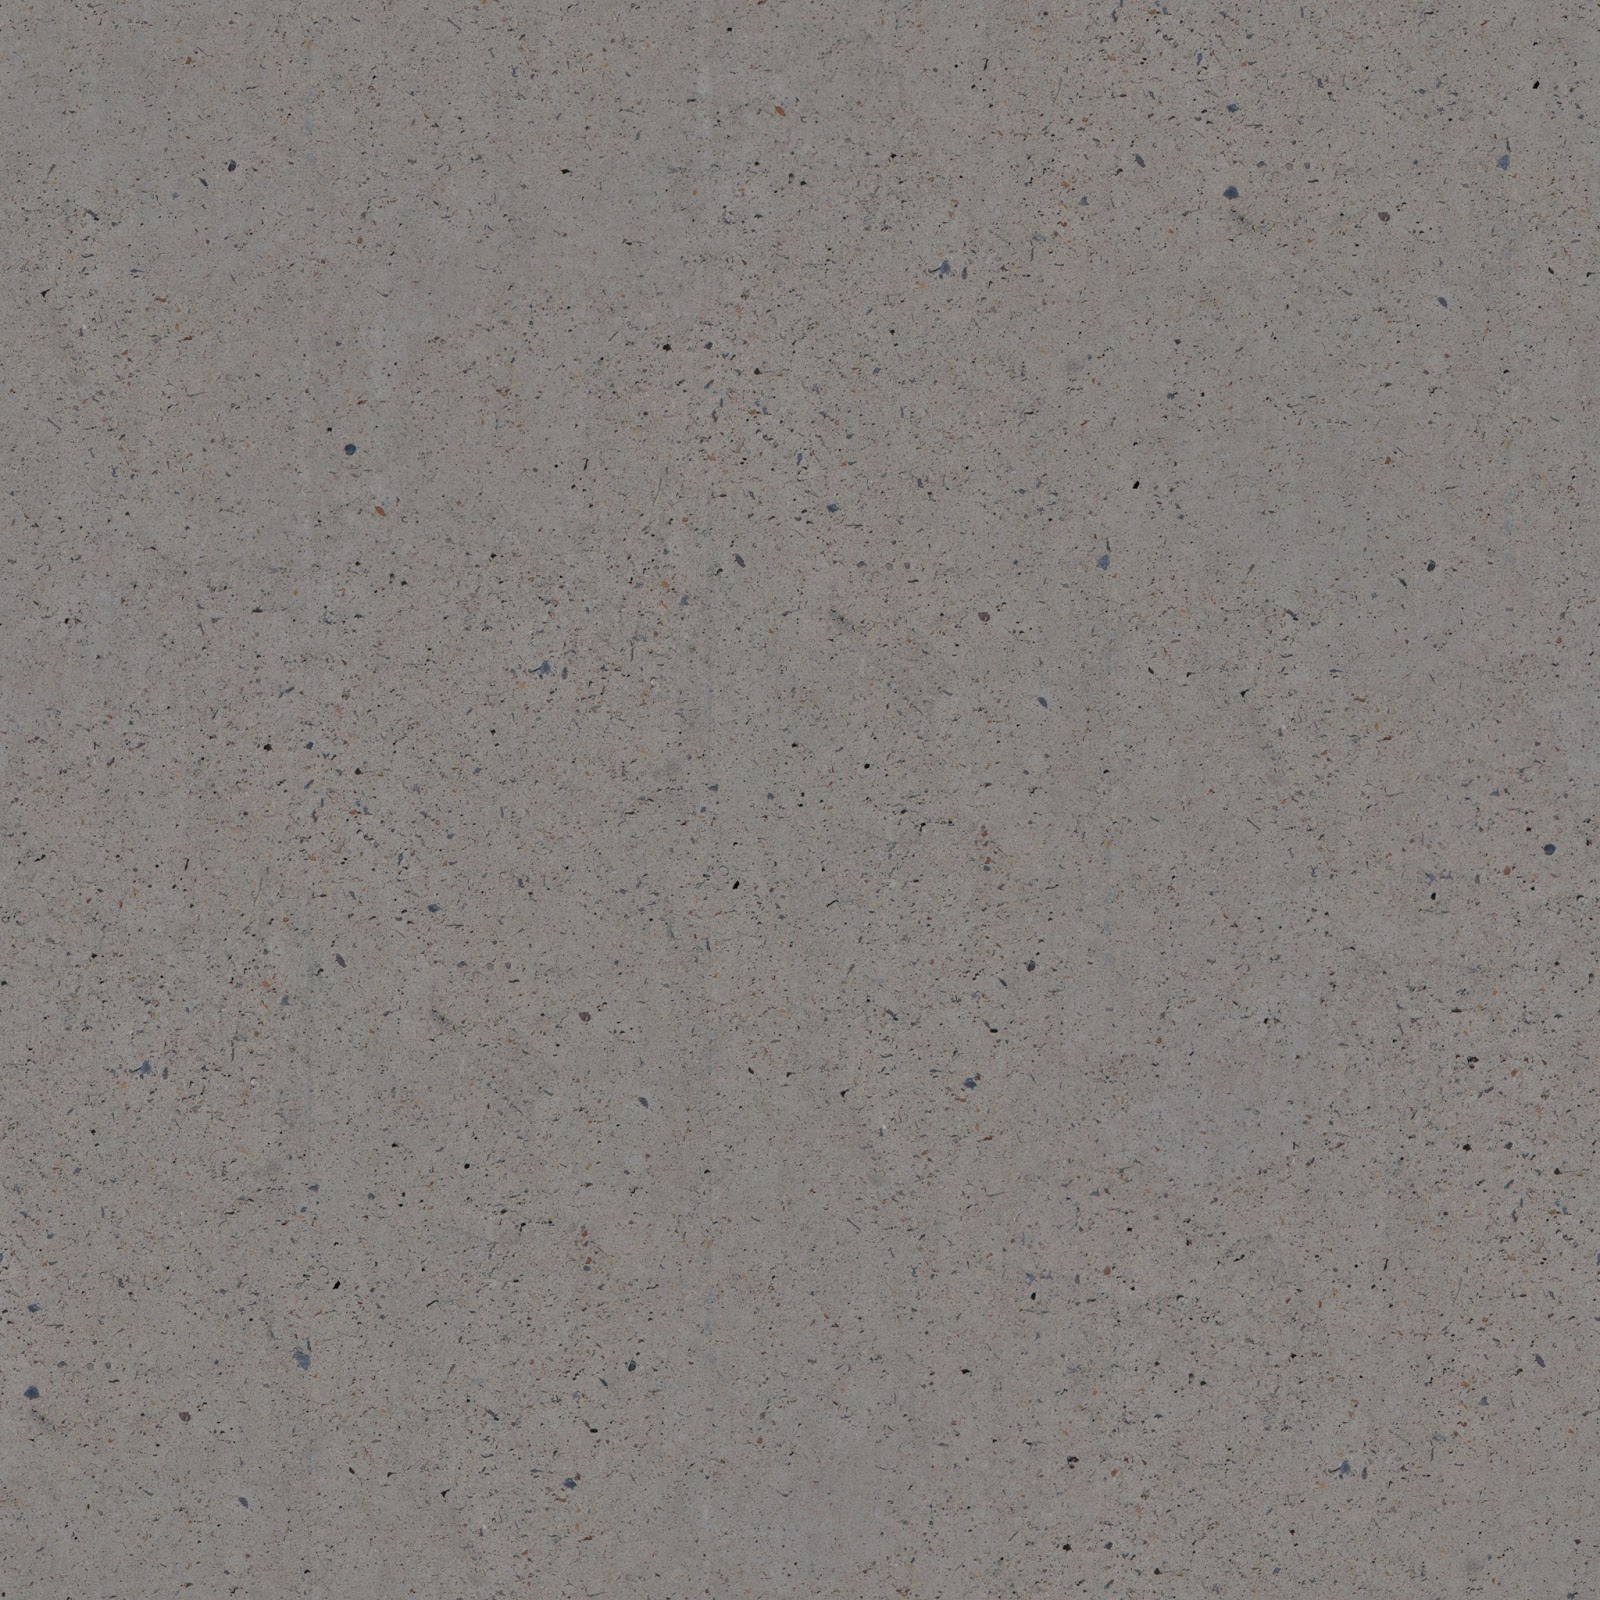 HIGH RESOLUTION TEXTURES: Smooth Concrete Texture September 2015